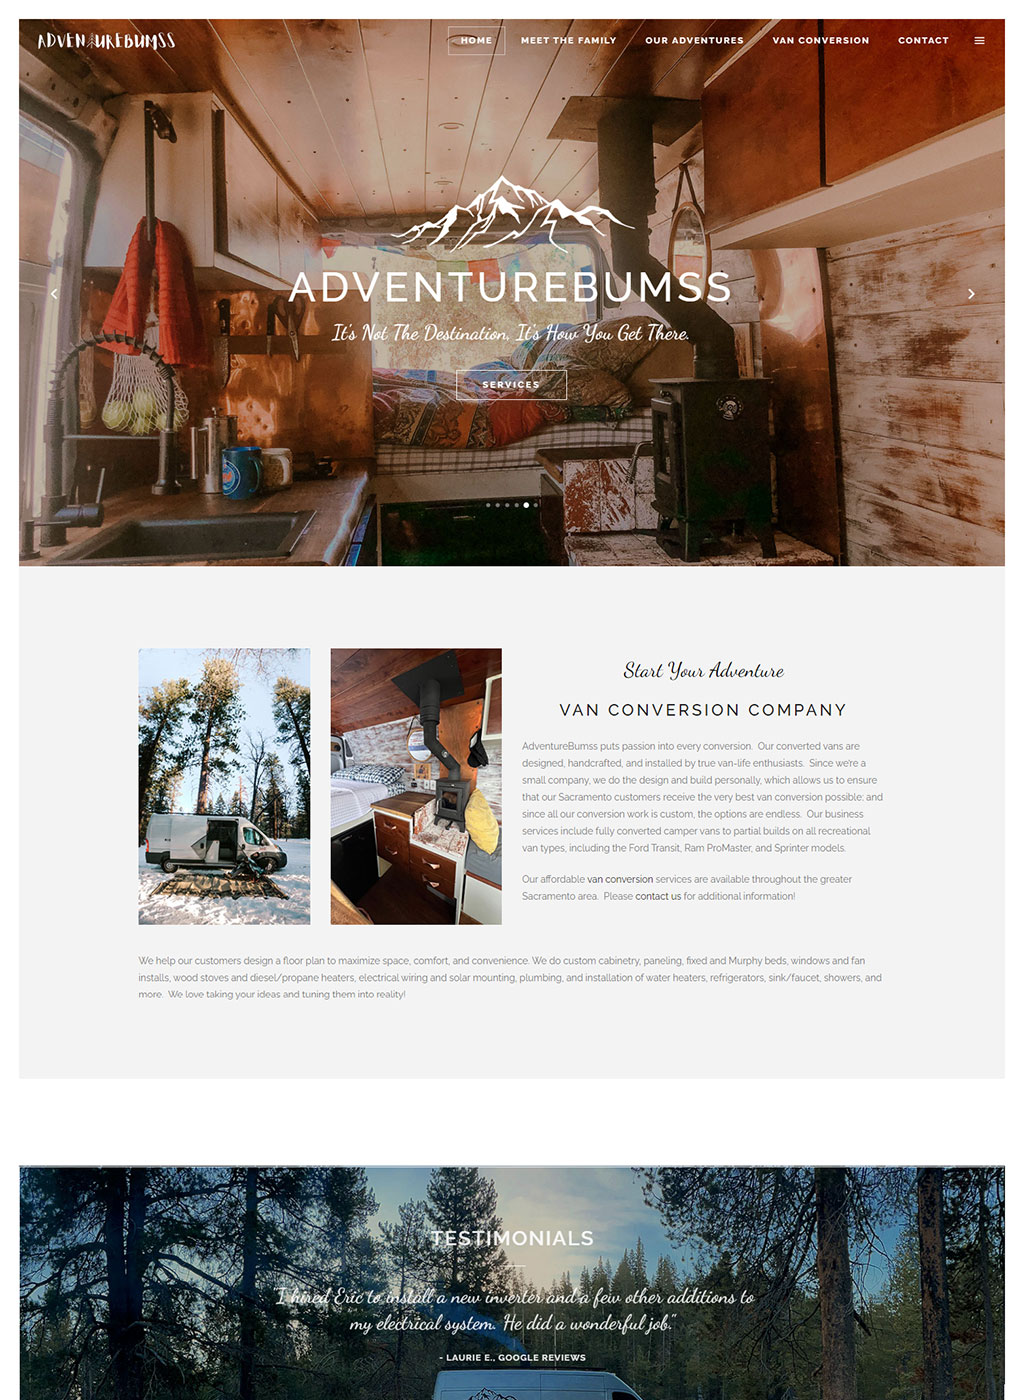 Website developed for AdventureBumss LLC